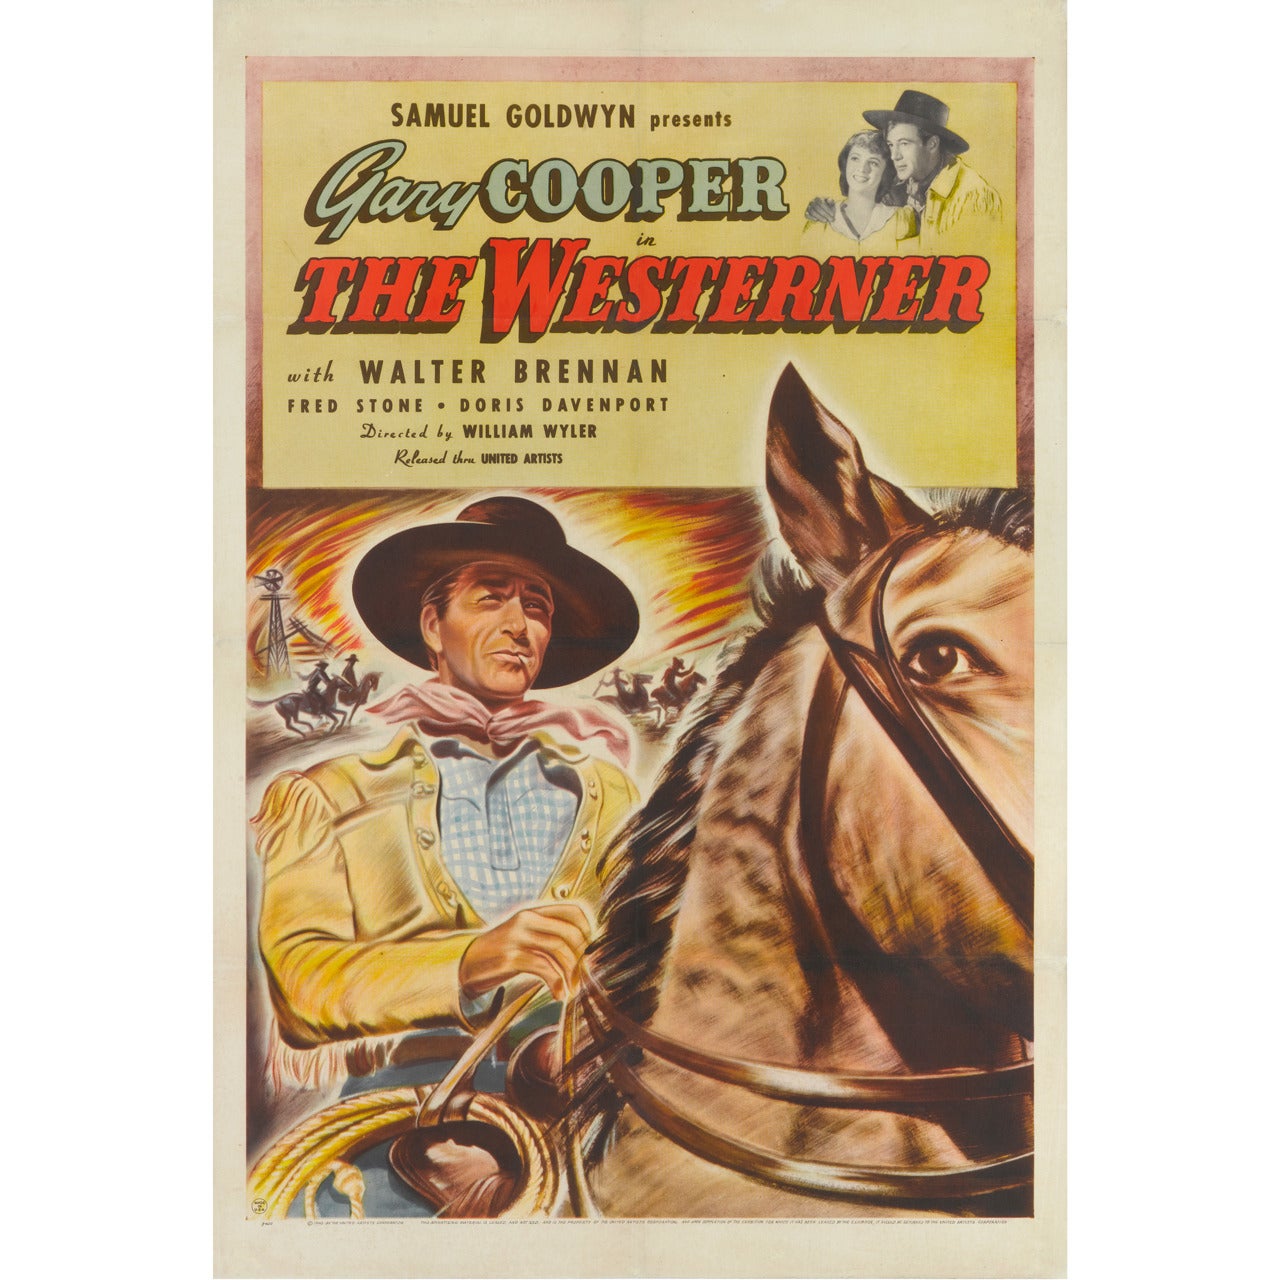 Film Poster for, "The Westerner"